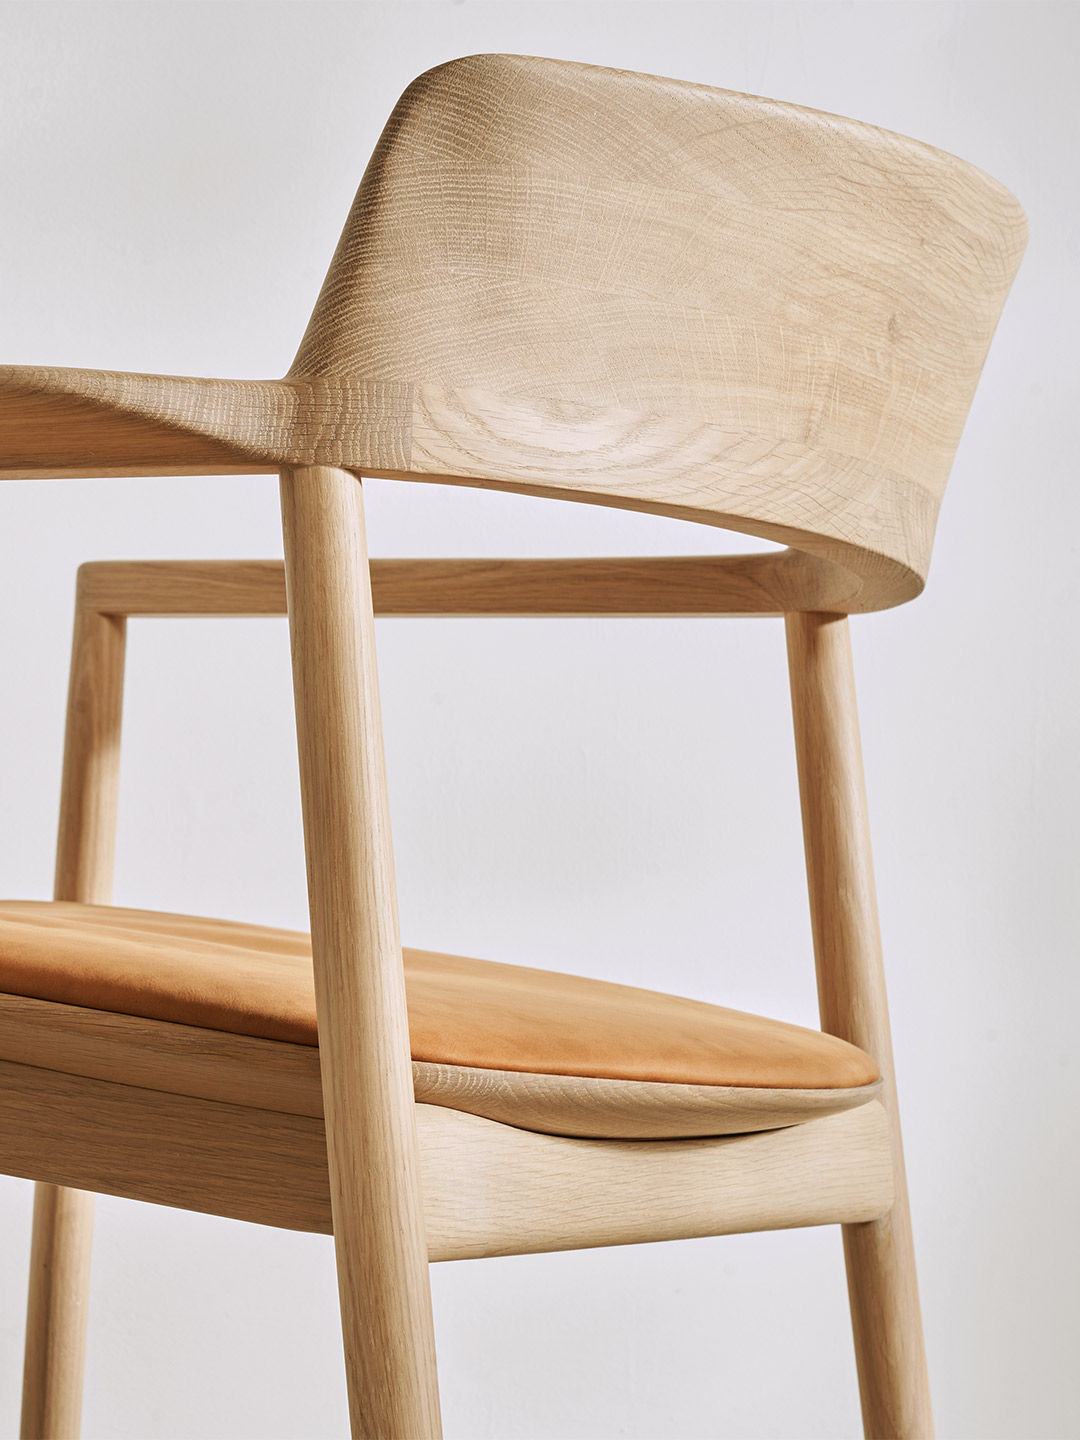 Timber furniture, designed and manufactured in Britain